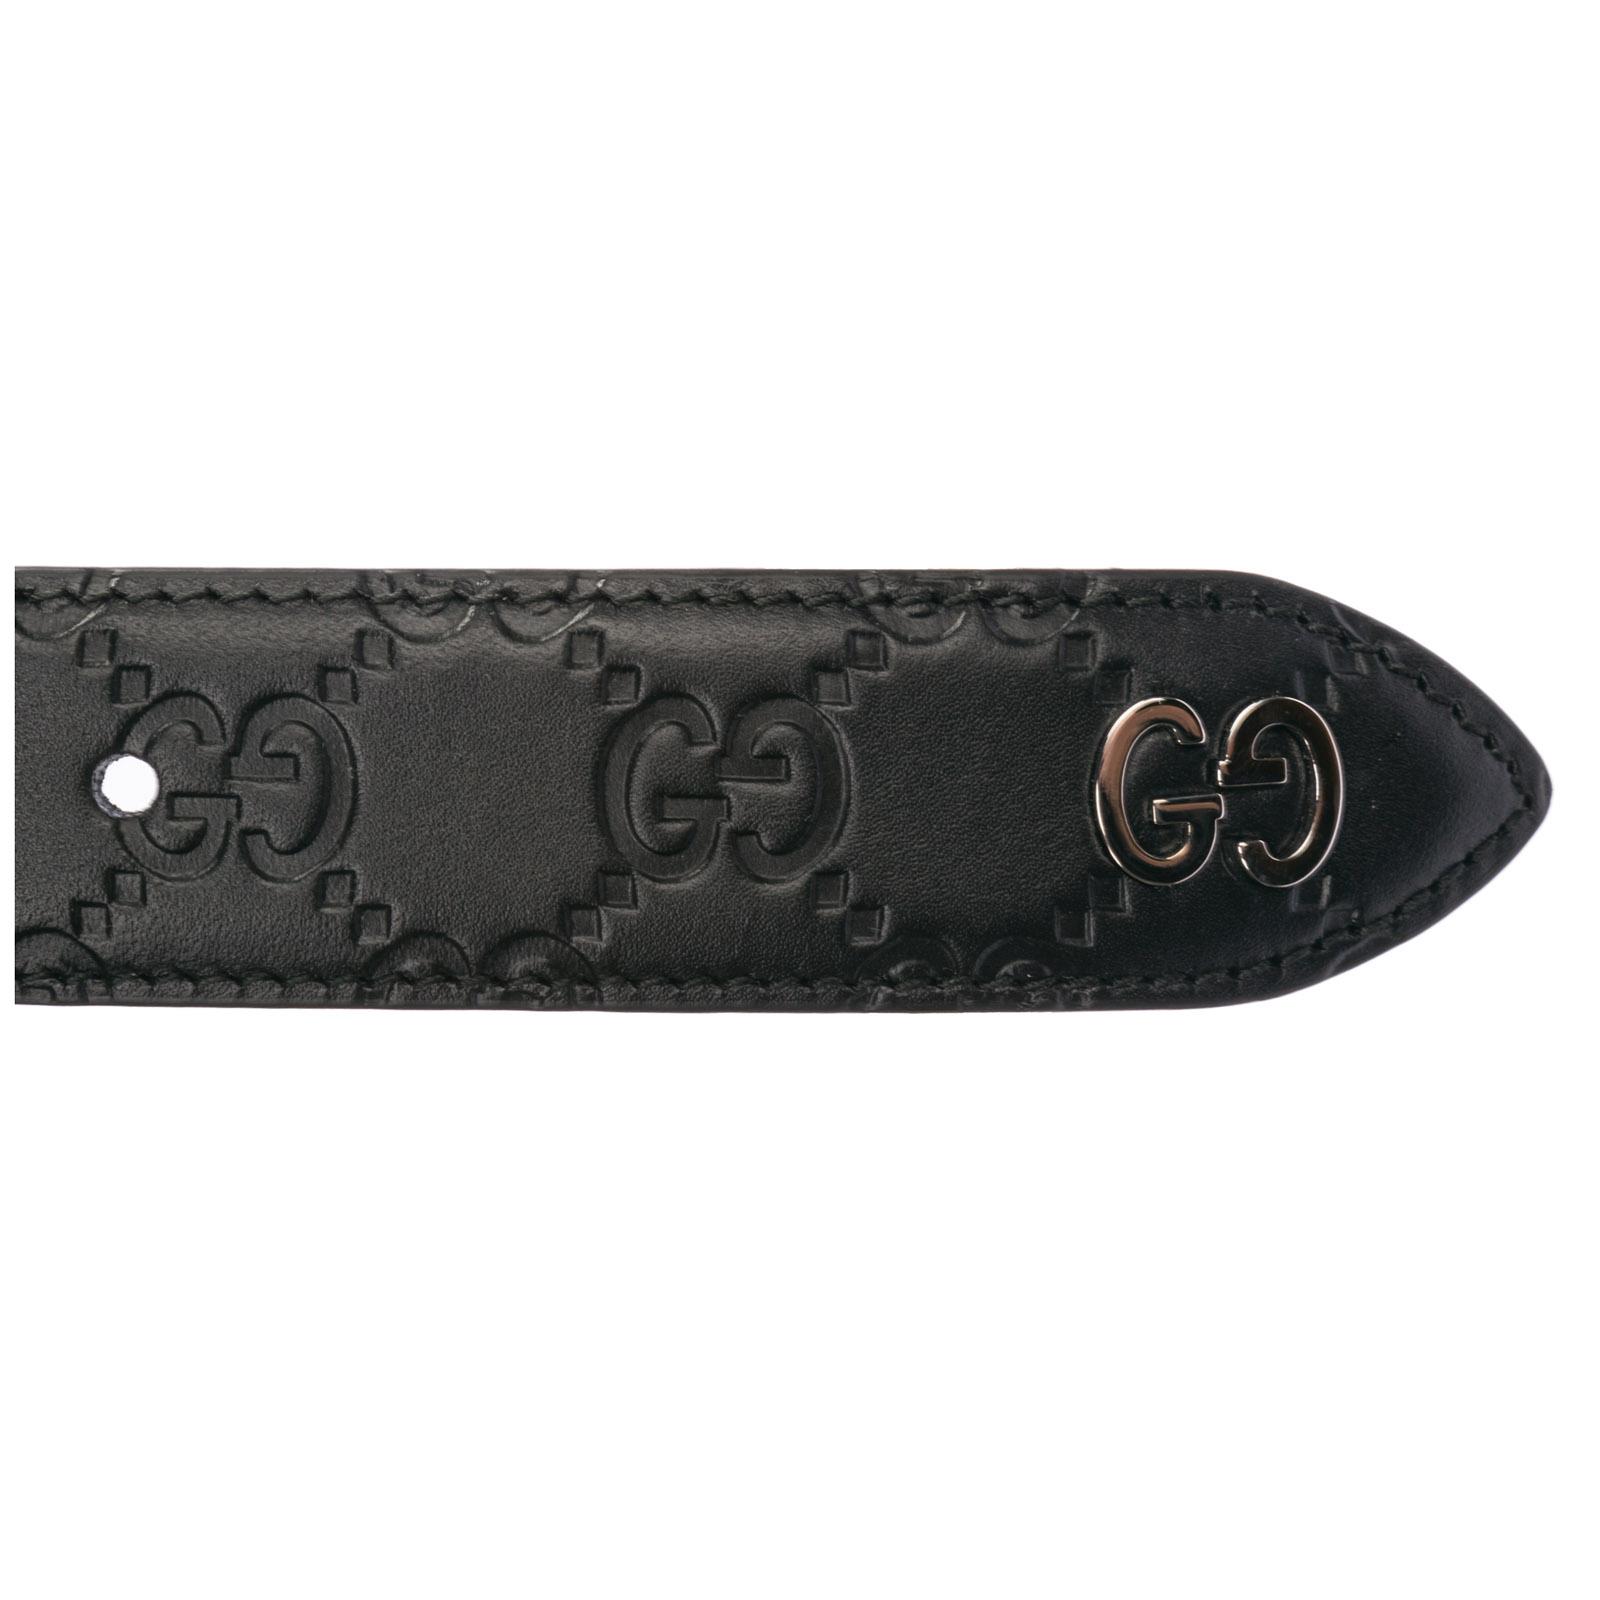 Gucci Genuine Leather Belt in Black for Men - Lyst